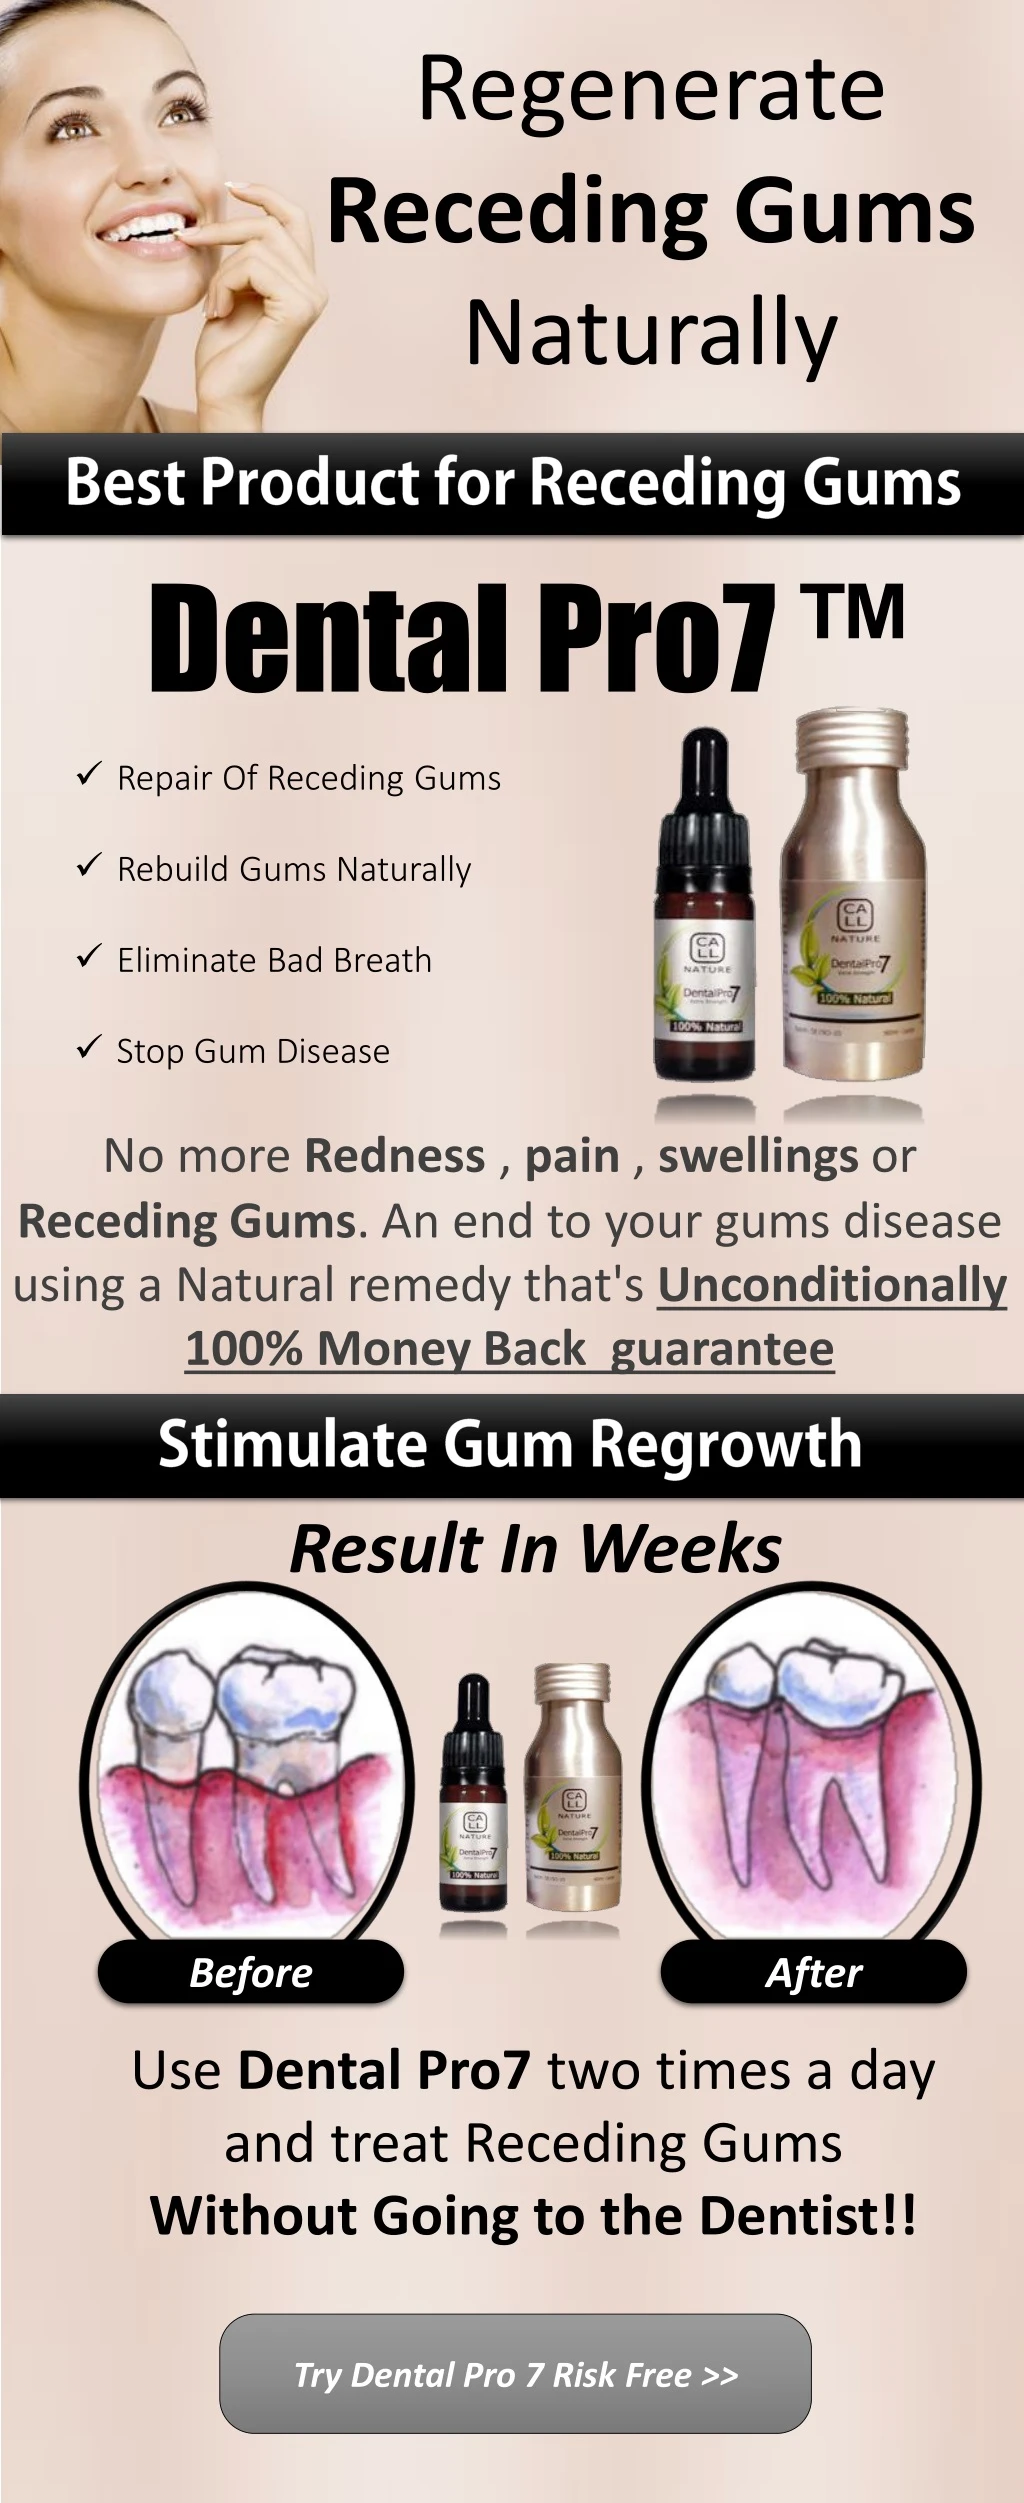 regenerate receding gums naturally